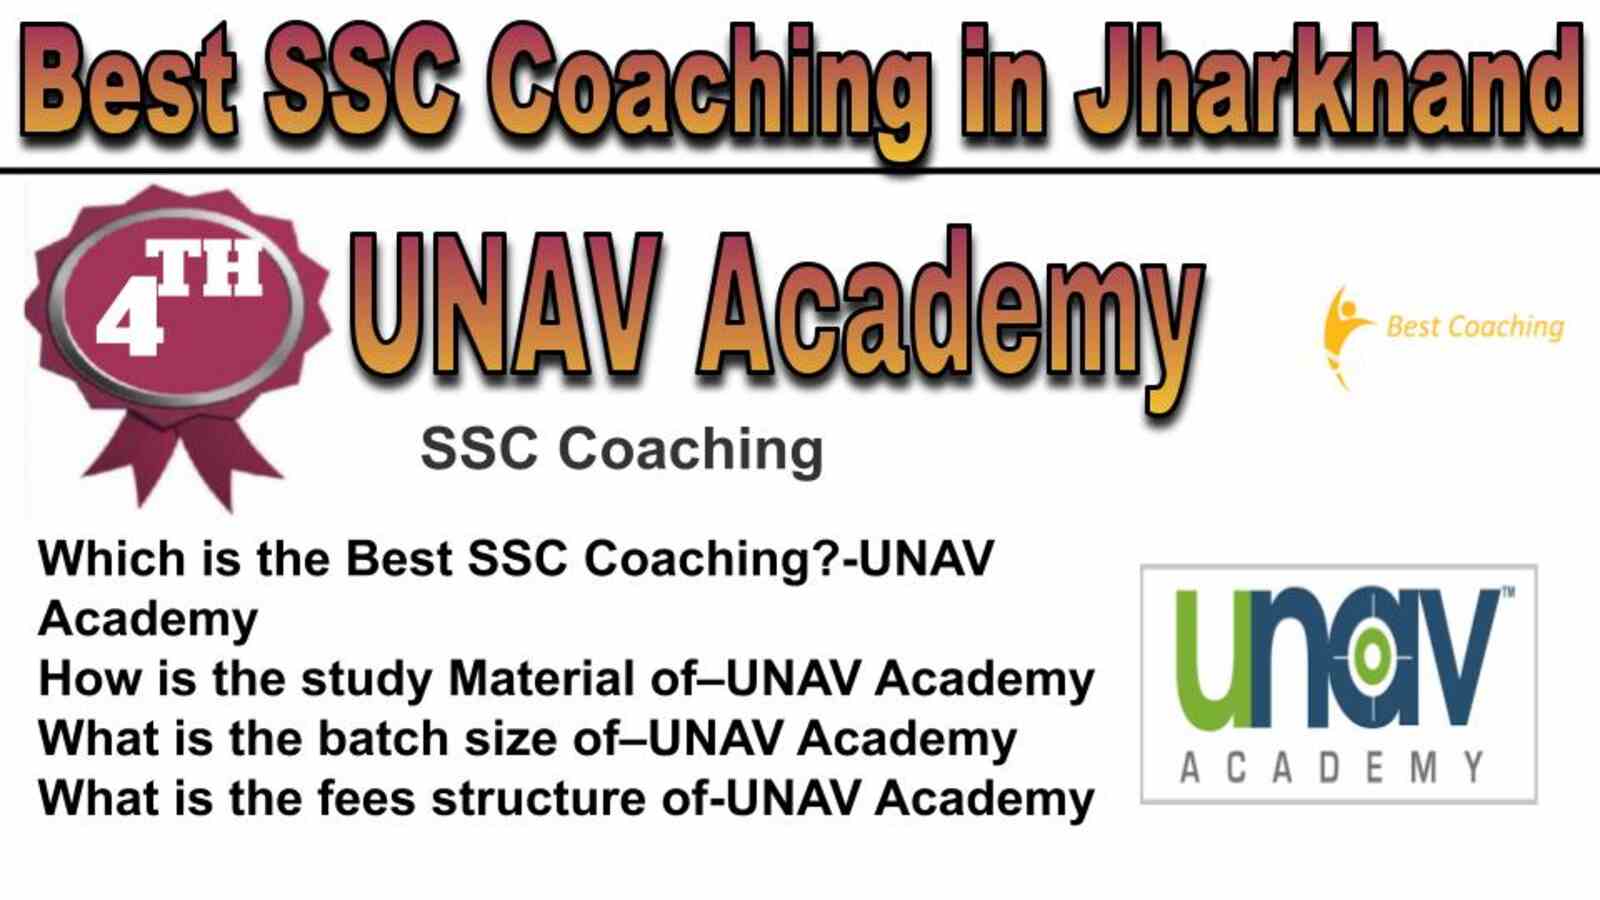 Rank 4 best SSC coaching in Jharkhand